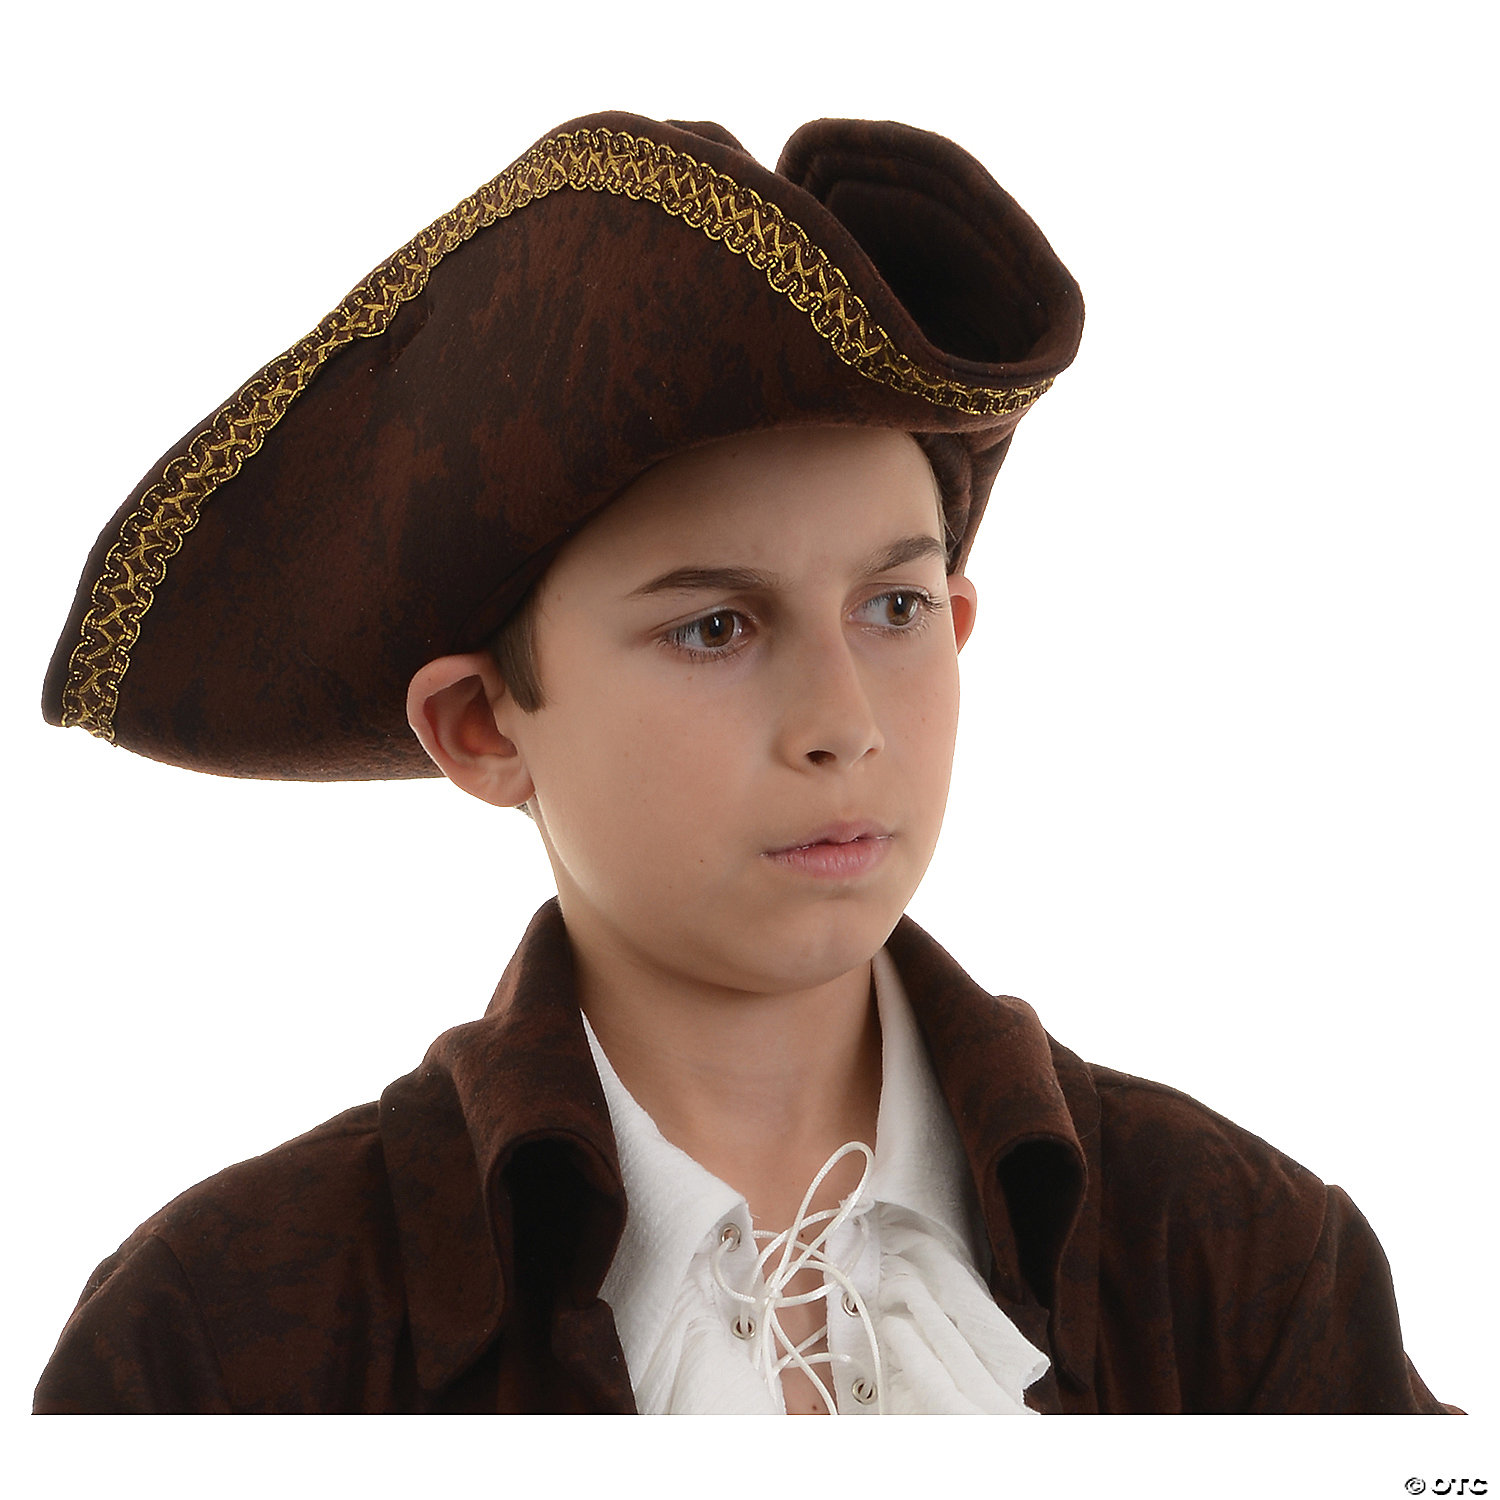 Child's Pirate Captain Hat